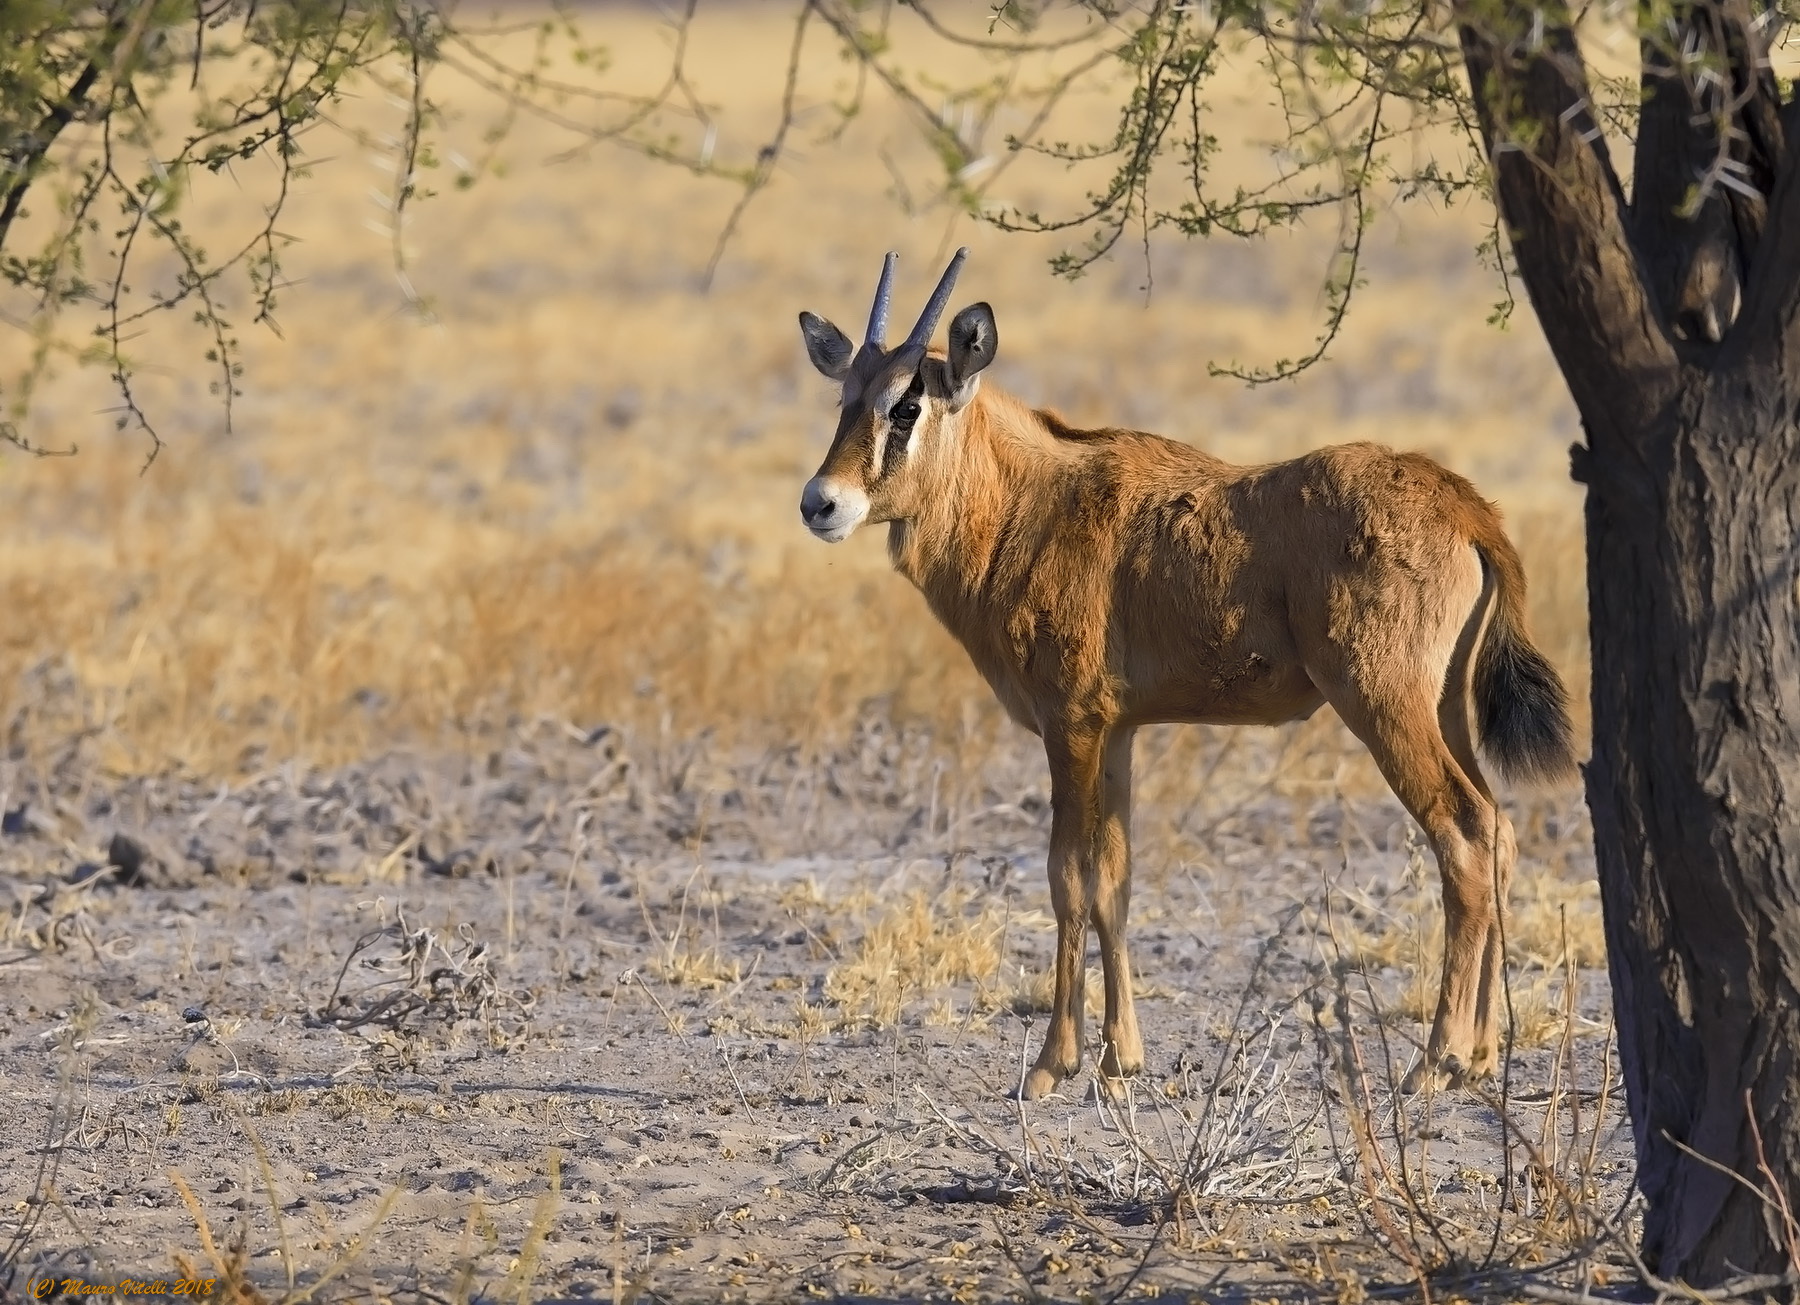 Young man of the oryx Botswana side Kalahari...